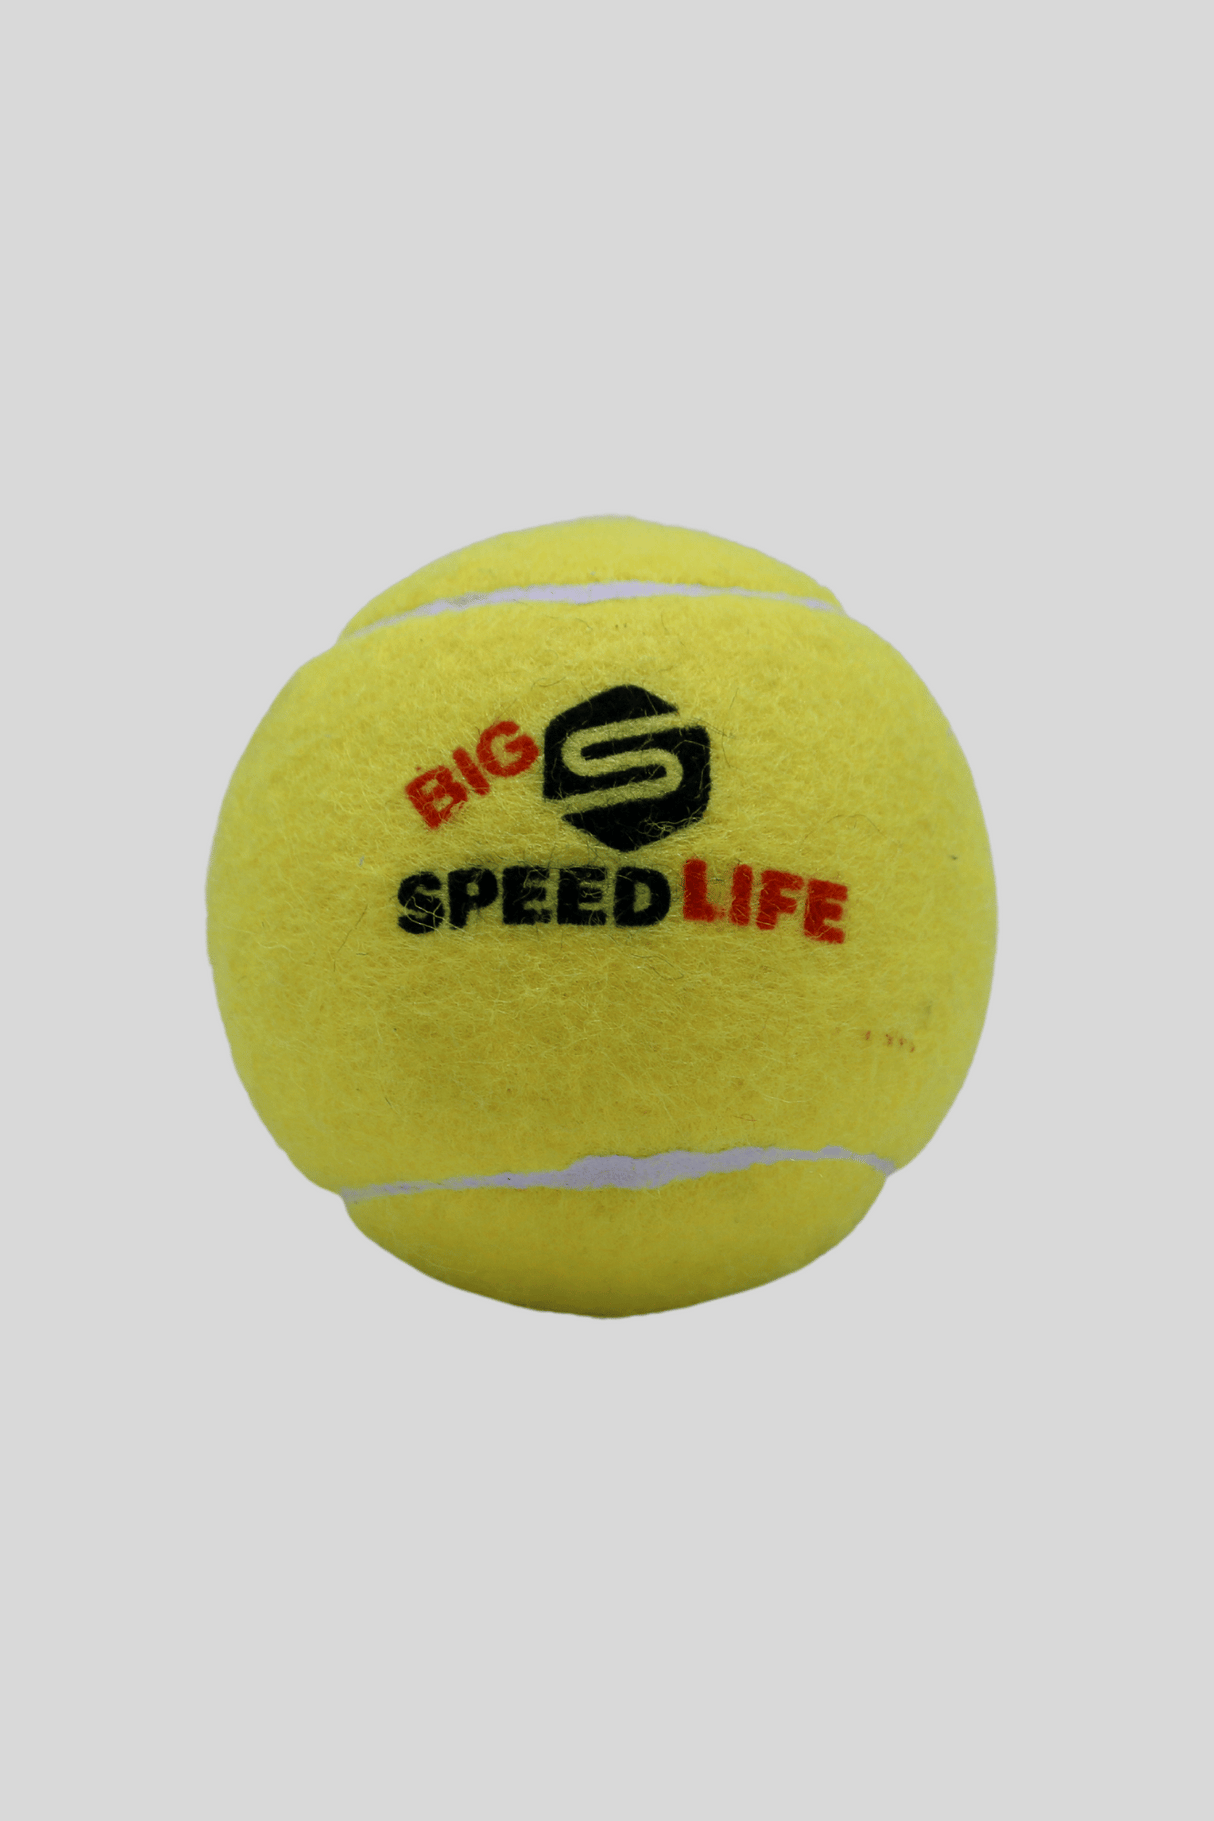 tennis ball big speed